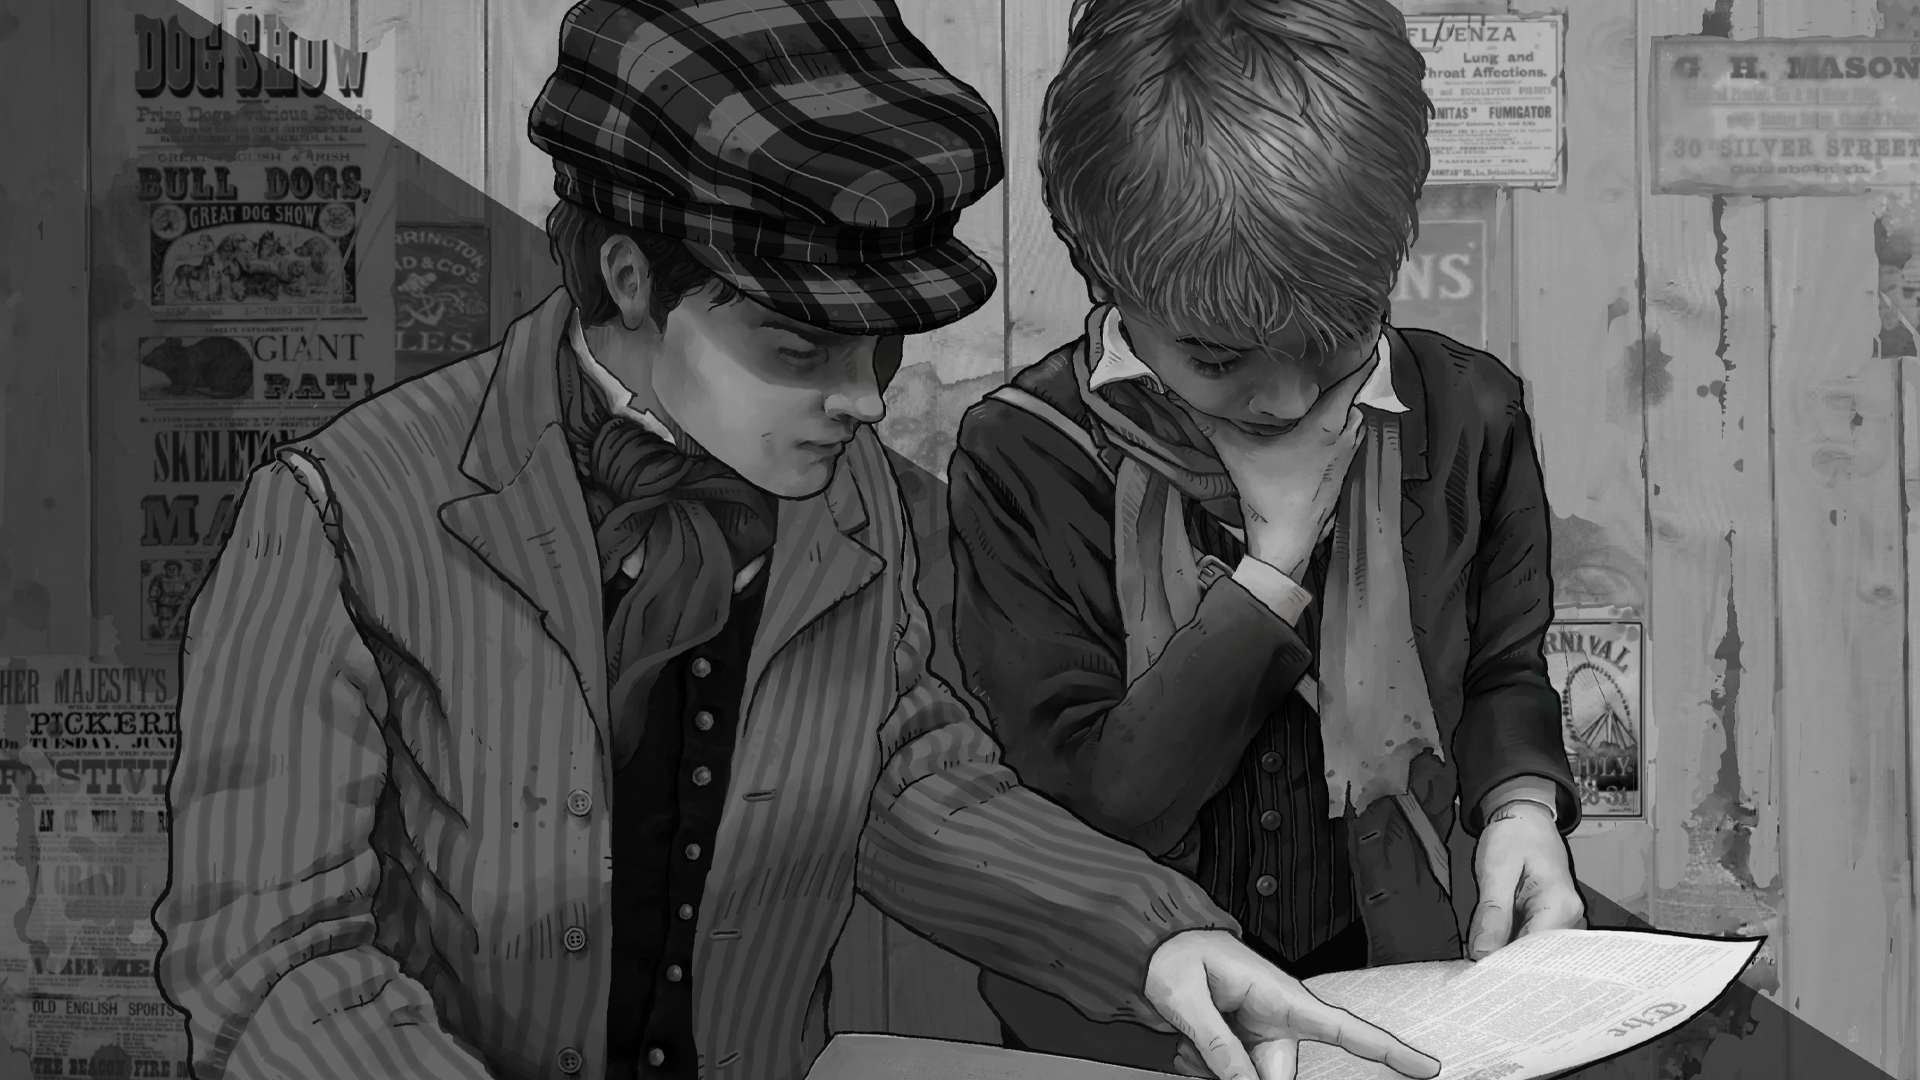 Sherlock Holmes: Baker Street Irregulars board game art